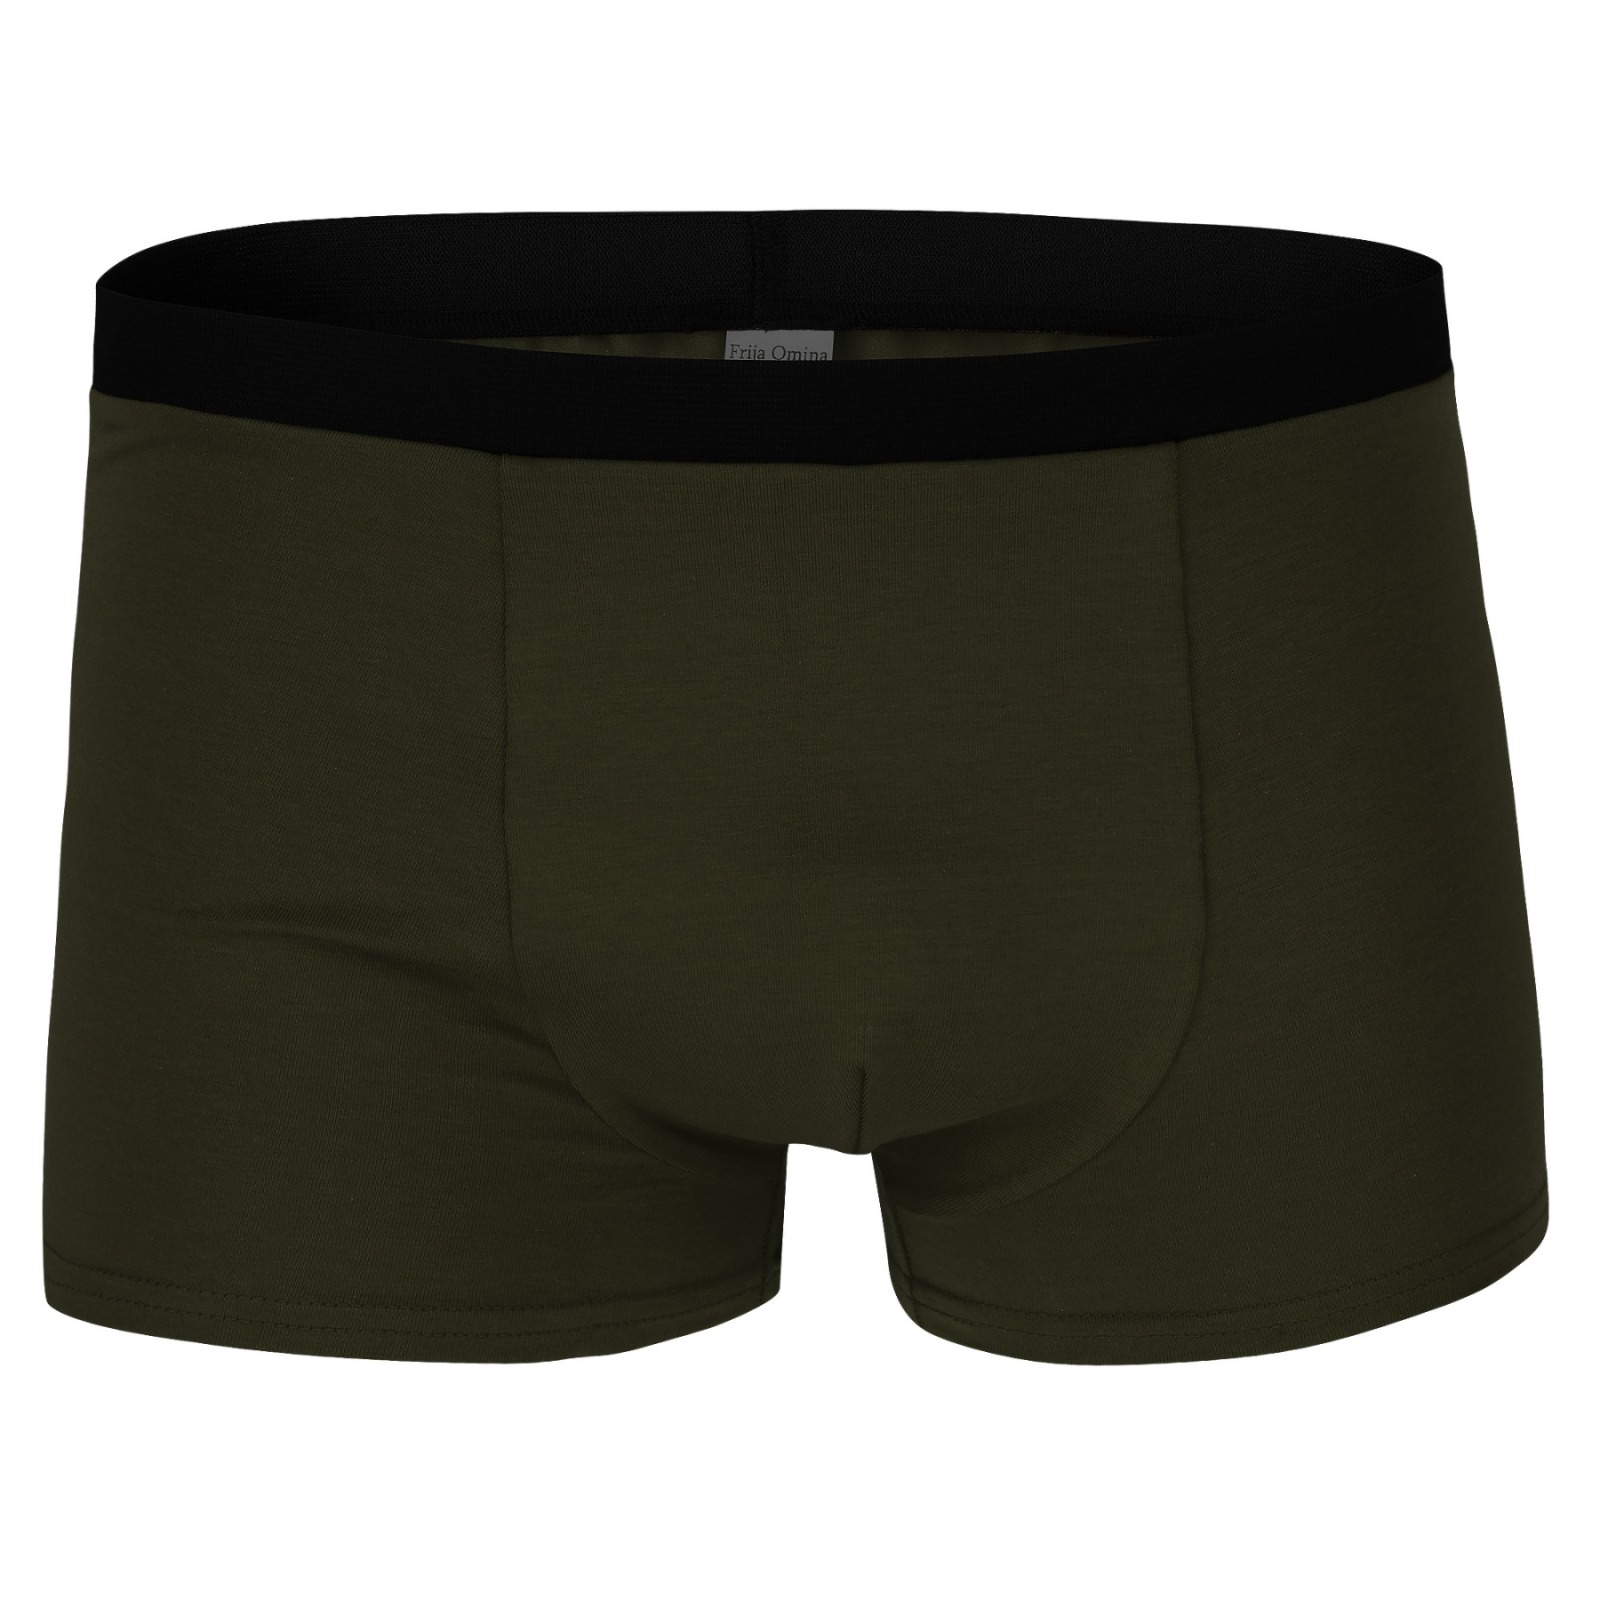 Organic men s trunk boxer shorts forest green